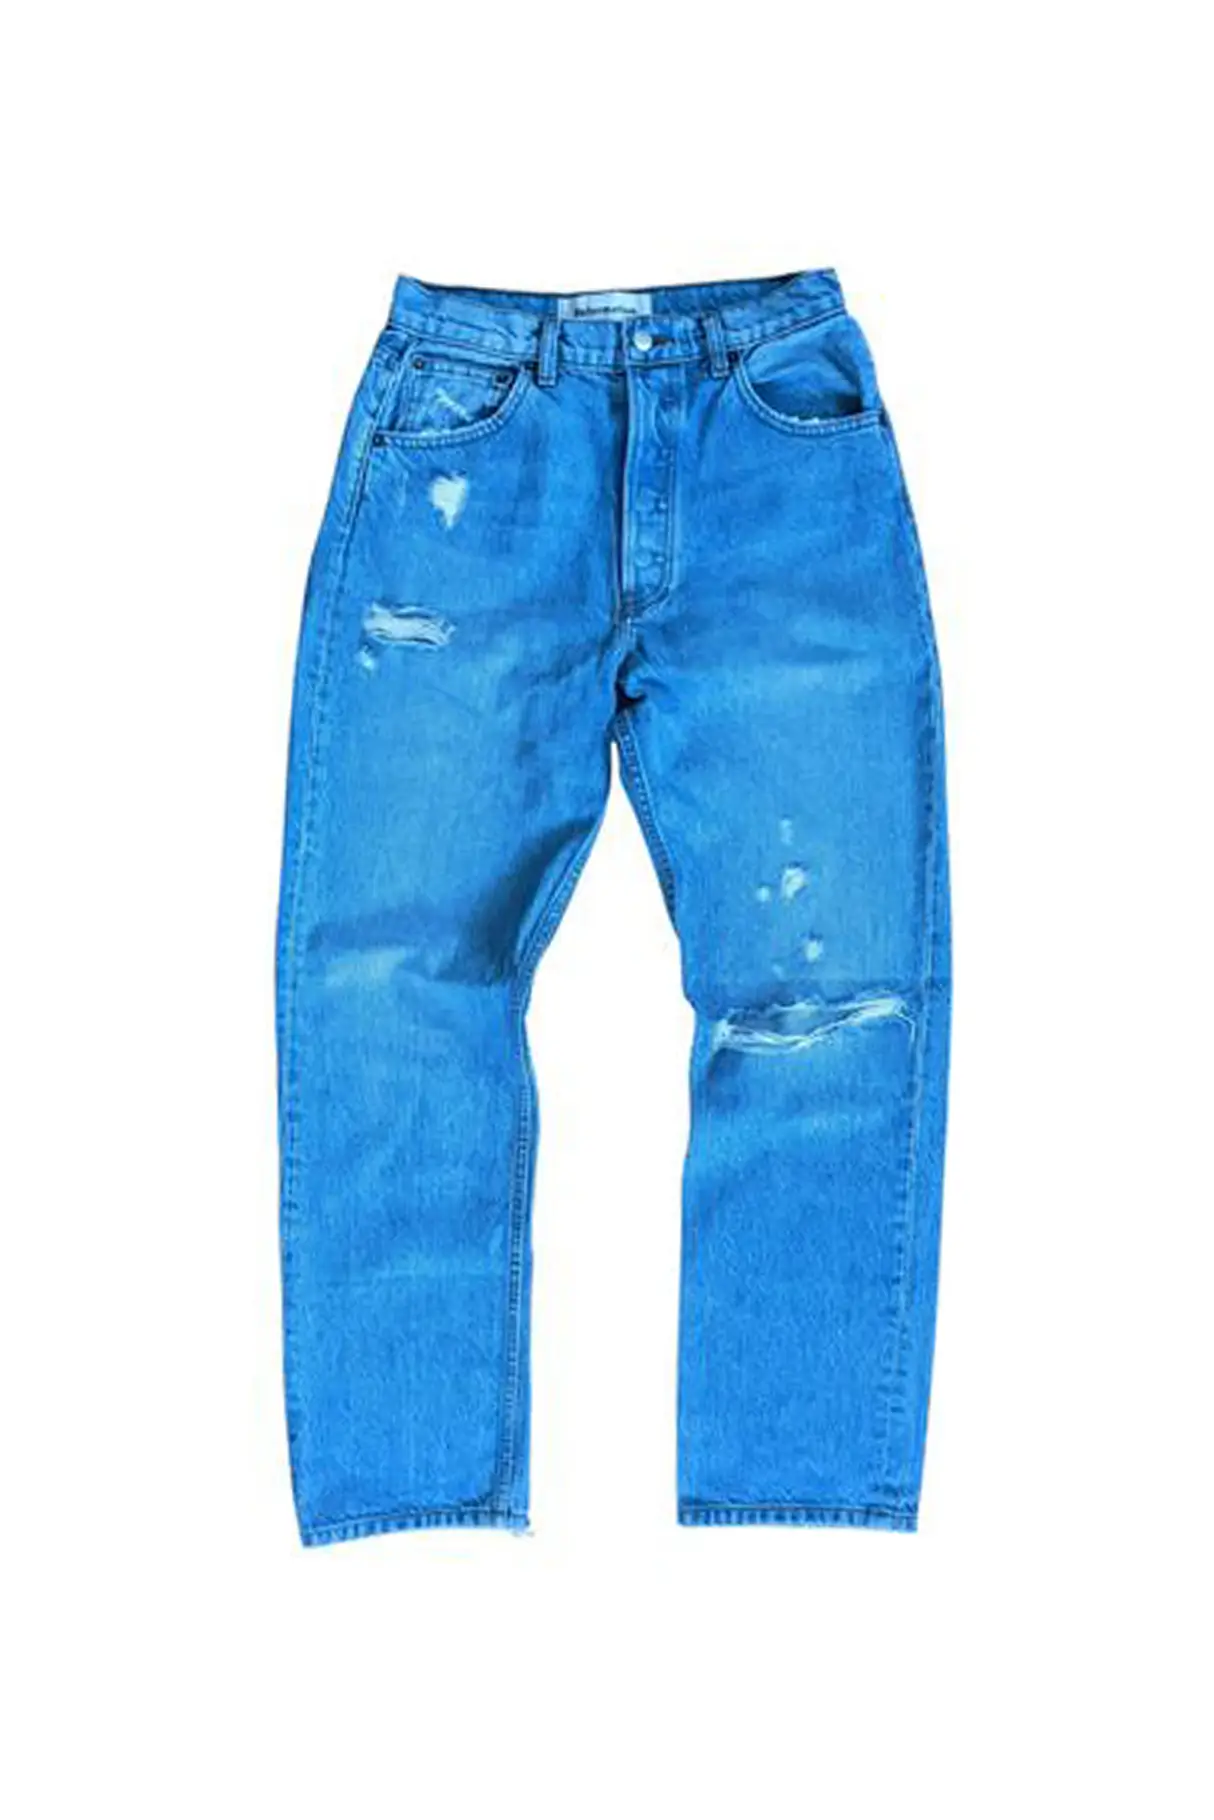 luxury-blue-jeans.jpg